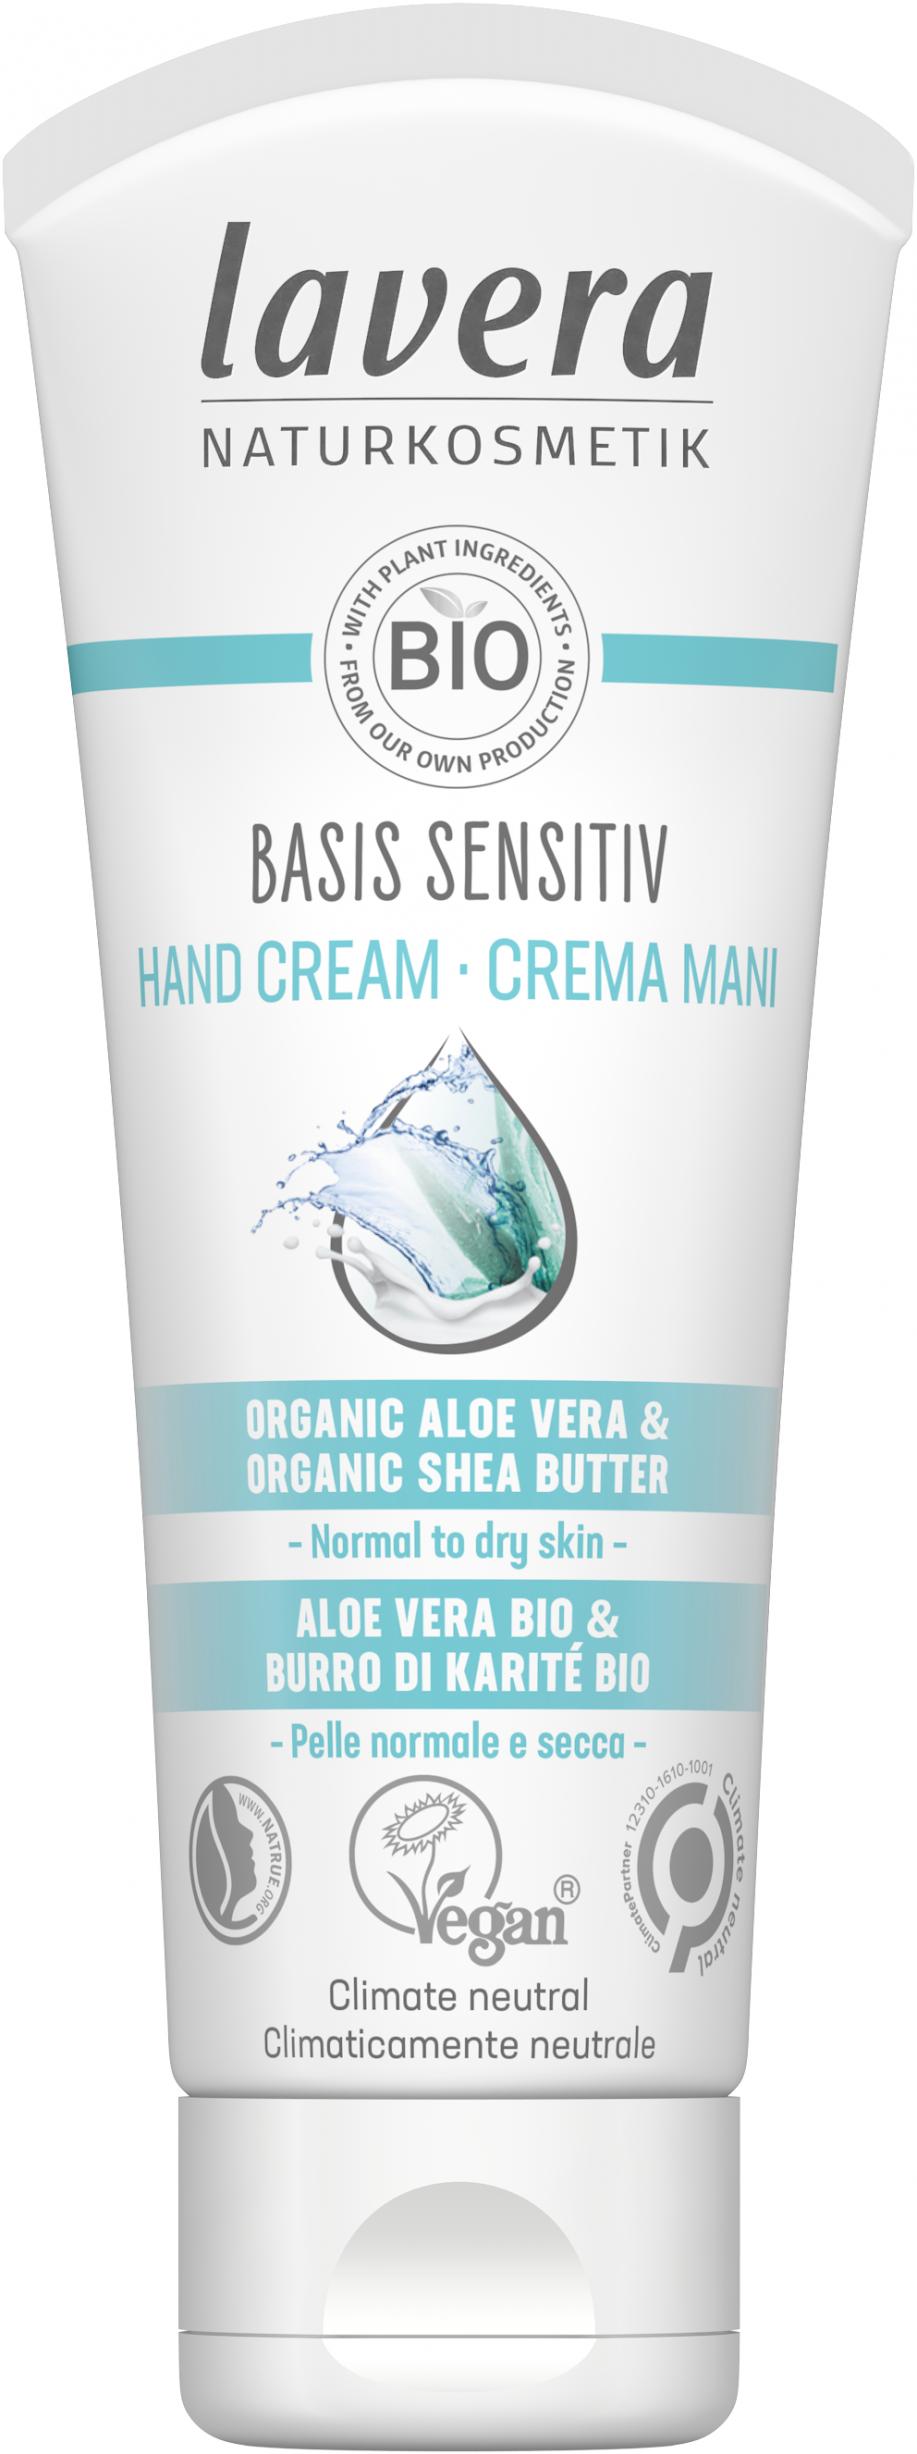 Basis Sensitiv Hand Cream 75ml